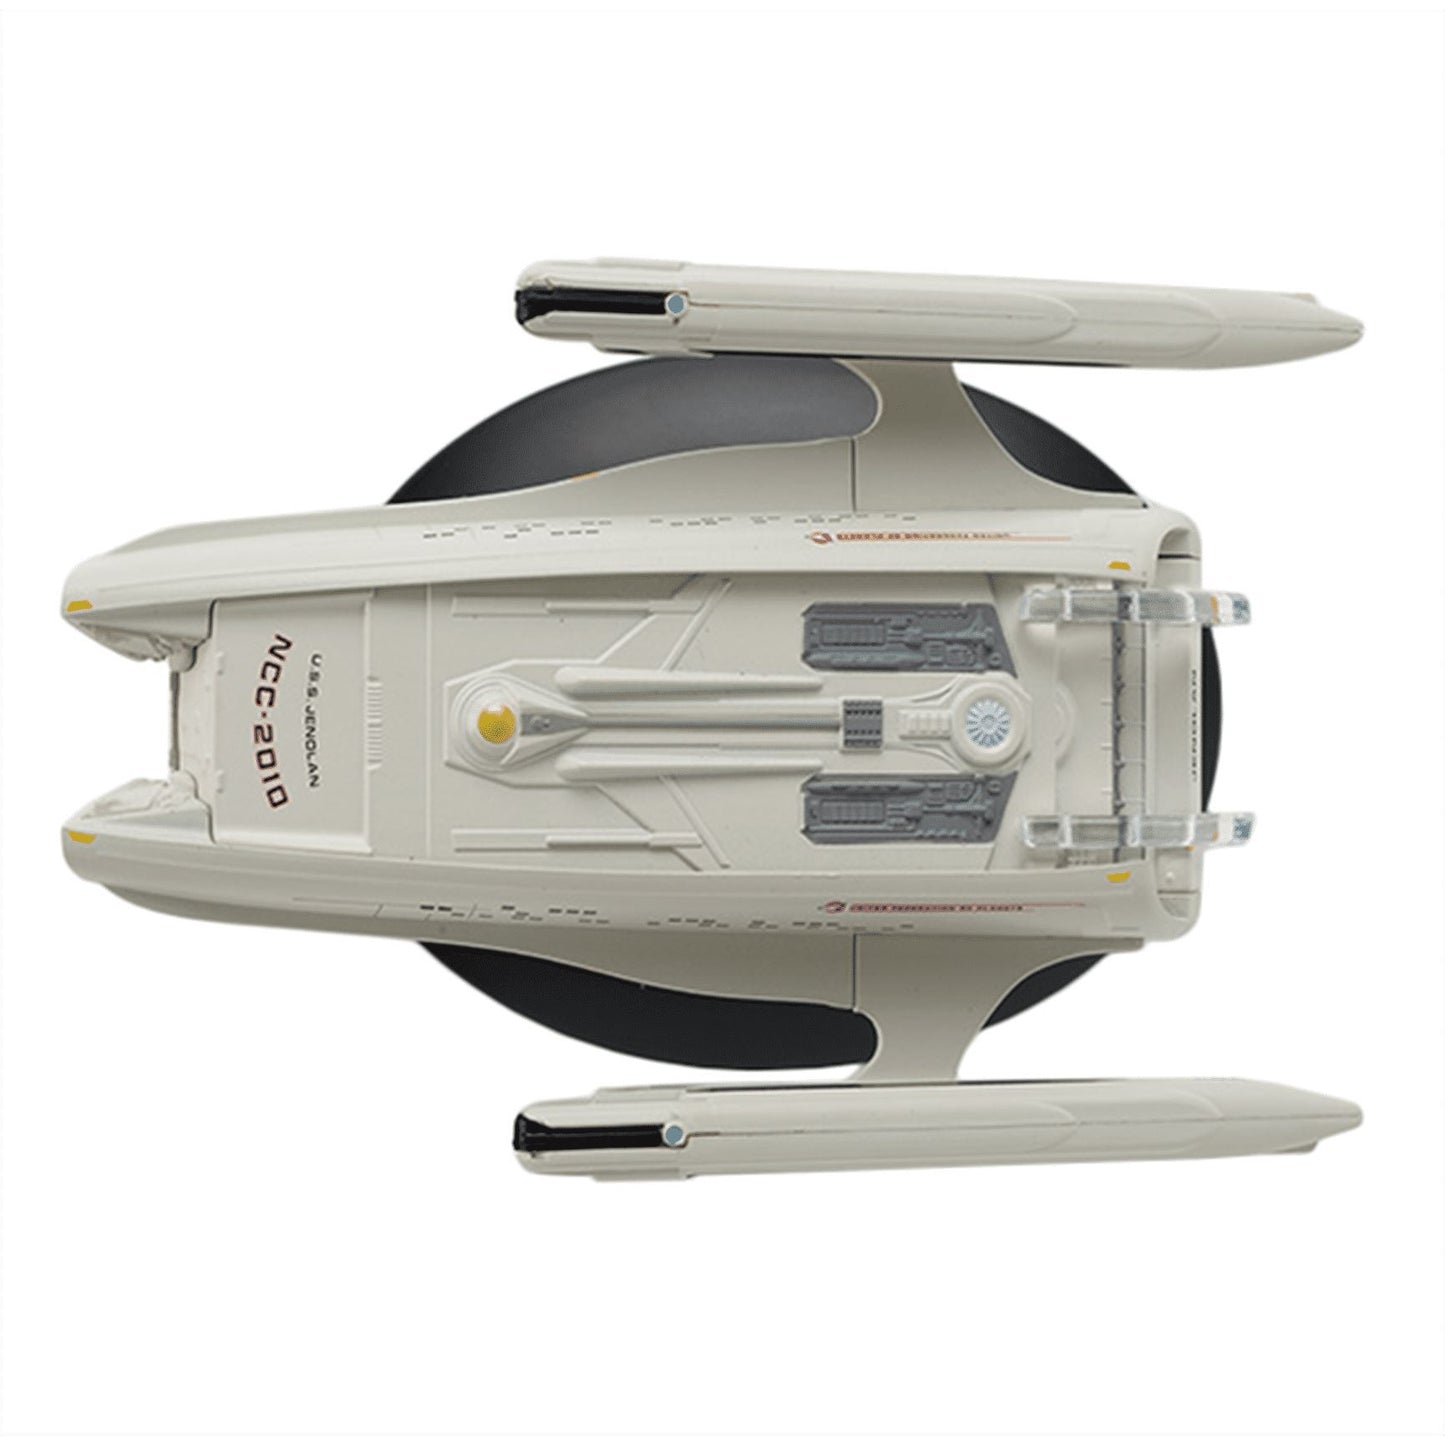 #104 U.S.S. Jenolan NCC-2010 Starship Model Die Cast Ship (Star Trek)